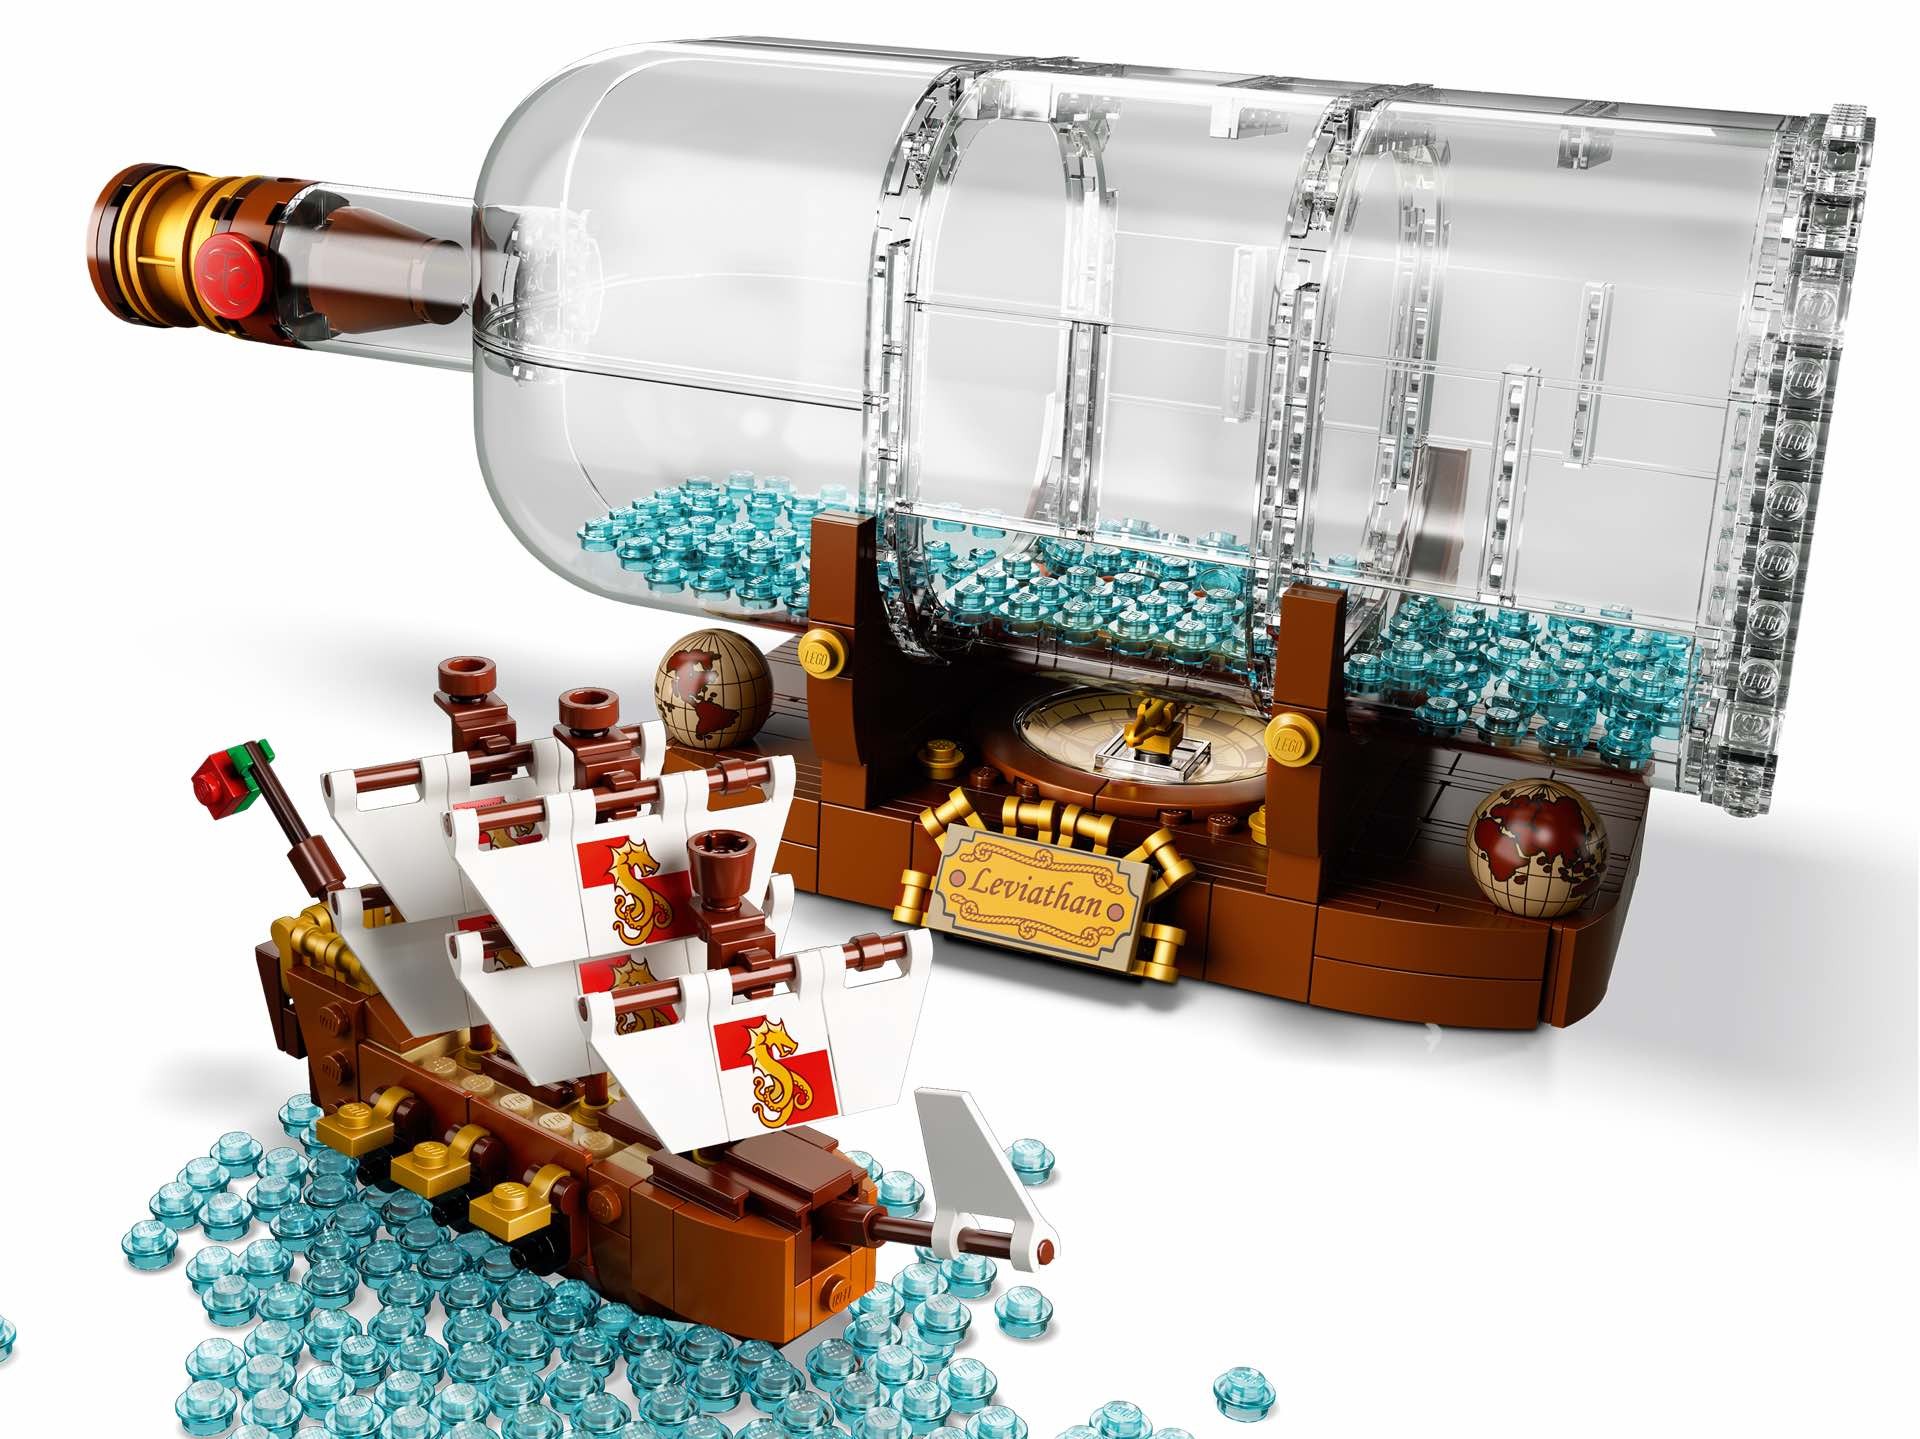 lego-ideas-ship-in-a-bottle-model-kit-water-pieces